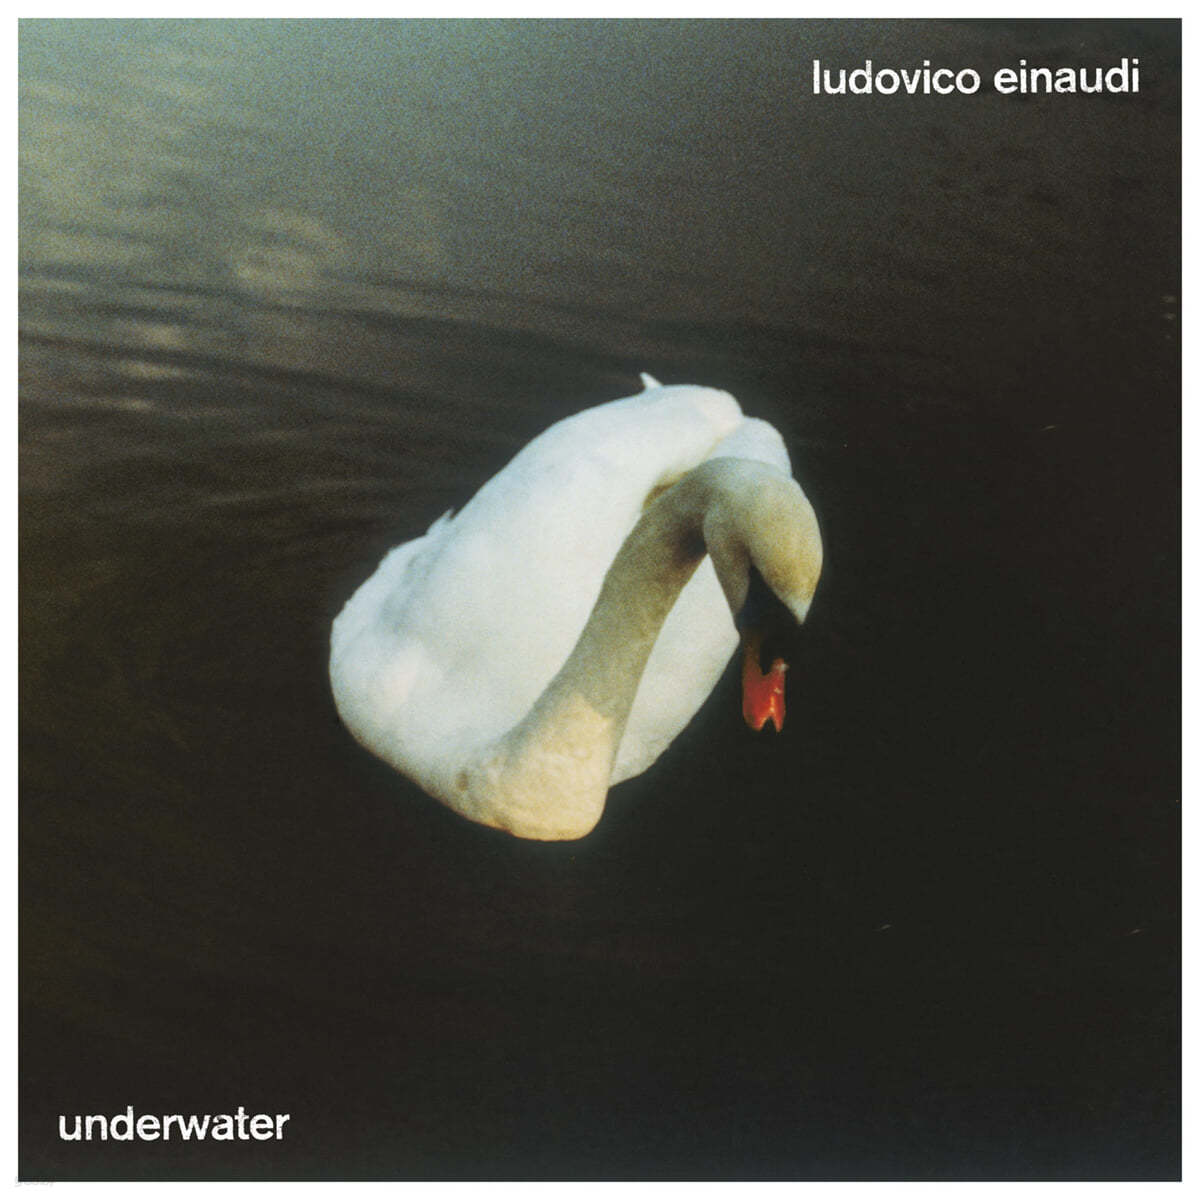 Ludovico Einaudi 루도비코 에이나우디 - 피아노 솔로 앨범 (underwater)